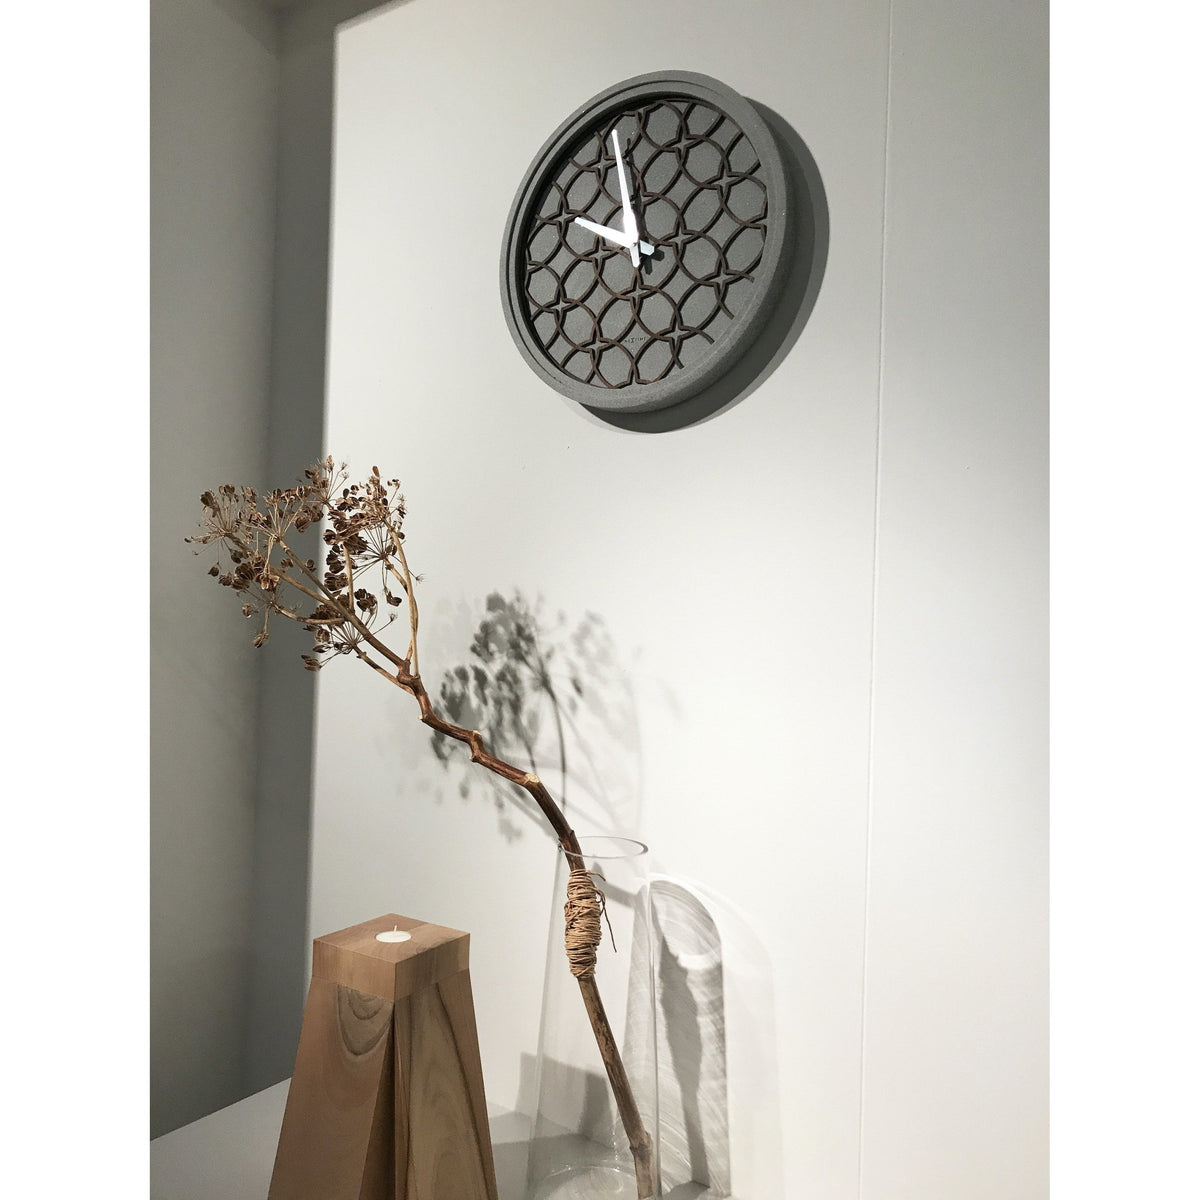 NeXtime - Wall Clock - Ø 39.5 cm - Polyresin/Wood – Grey – &#39;Concreto love&#39;